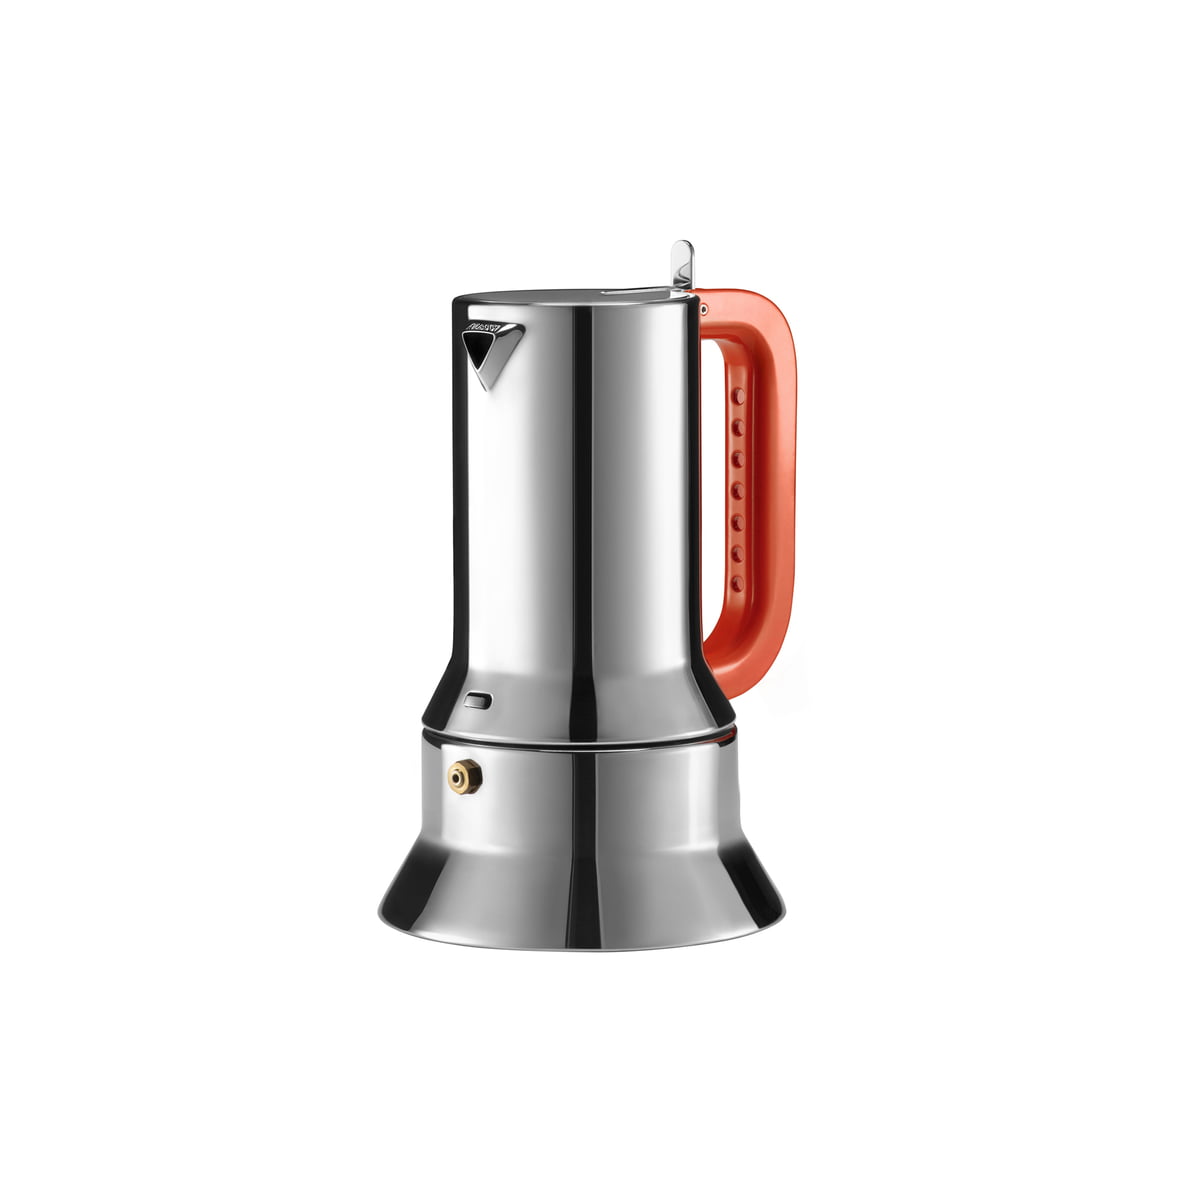 https://cdn.connox.com/m/100030/537848/media/alessi/November-2021/Alessi-9090-manico-forato-Espressomaschine-Induktion-15-cl-orange-Edelstahl.jpg